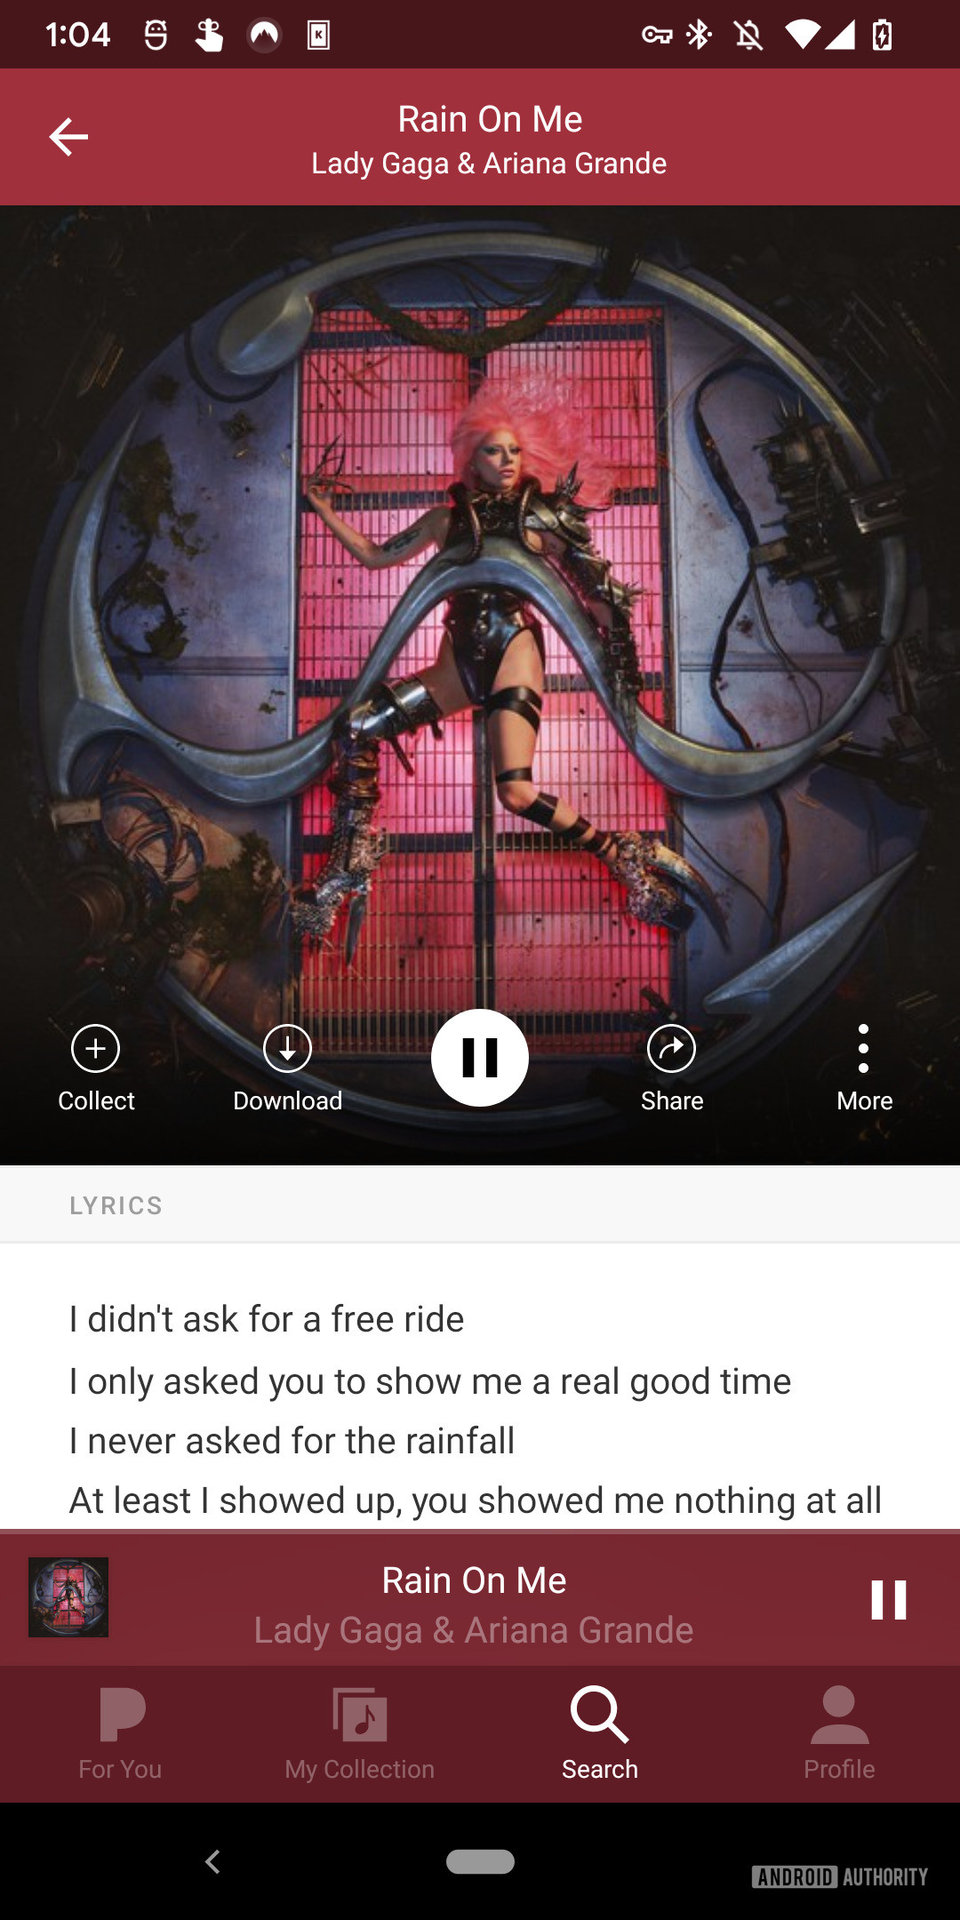 Screenshot of the Pandora app showing the lyrics to Rain on Me.